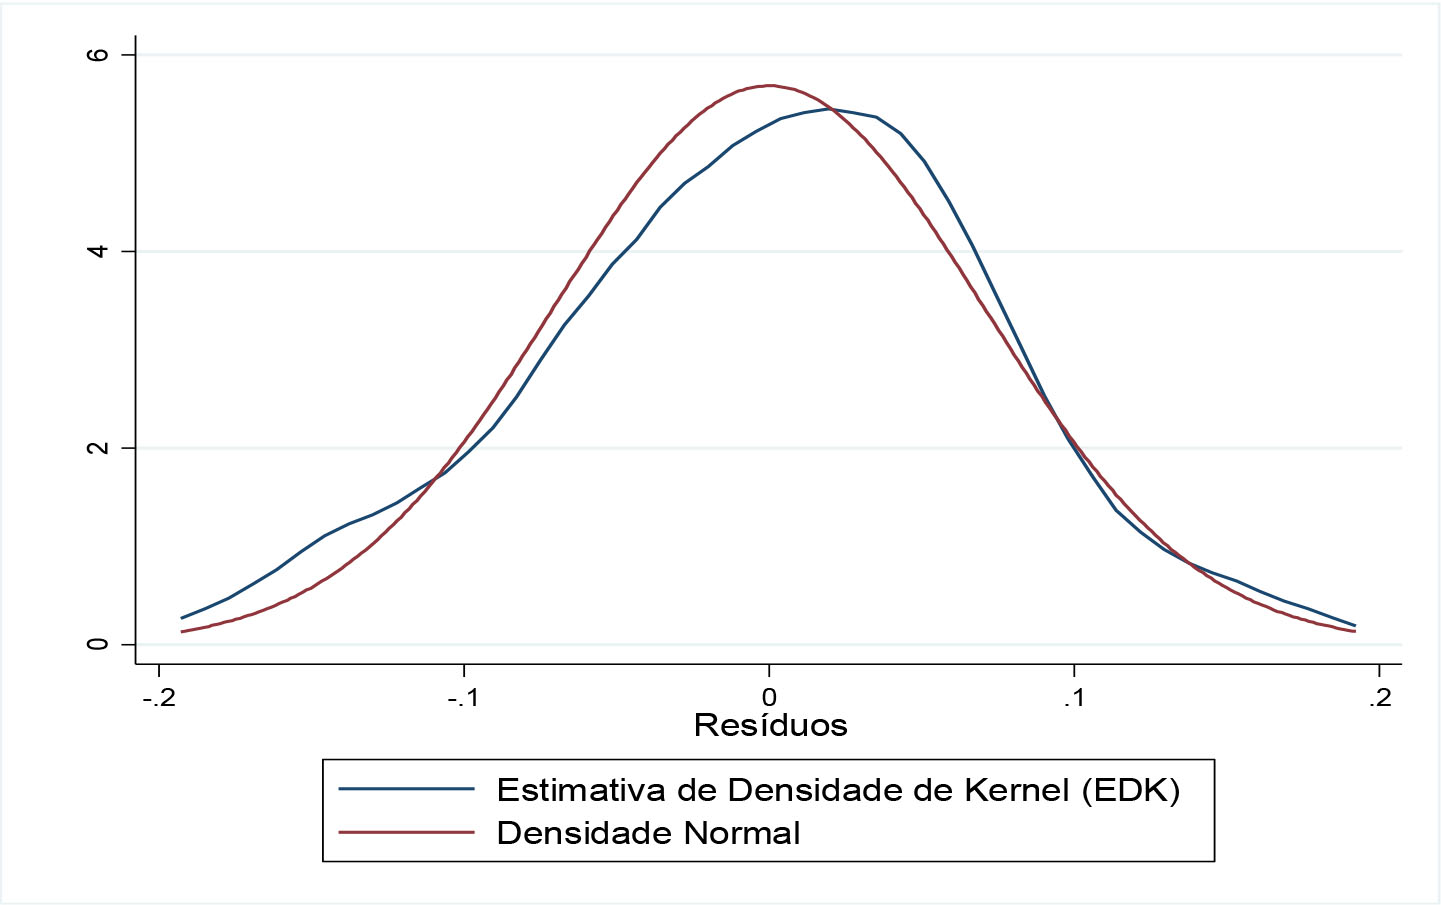 Estimativa de Densidade de Kernel x Densidade Normal